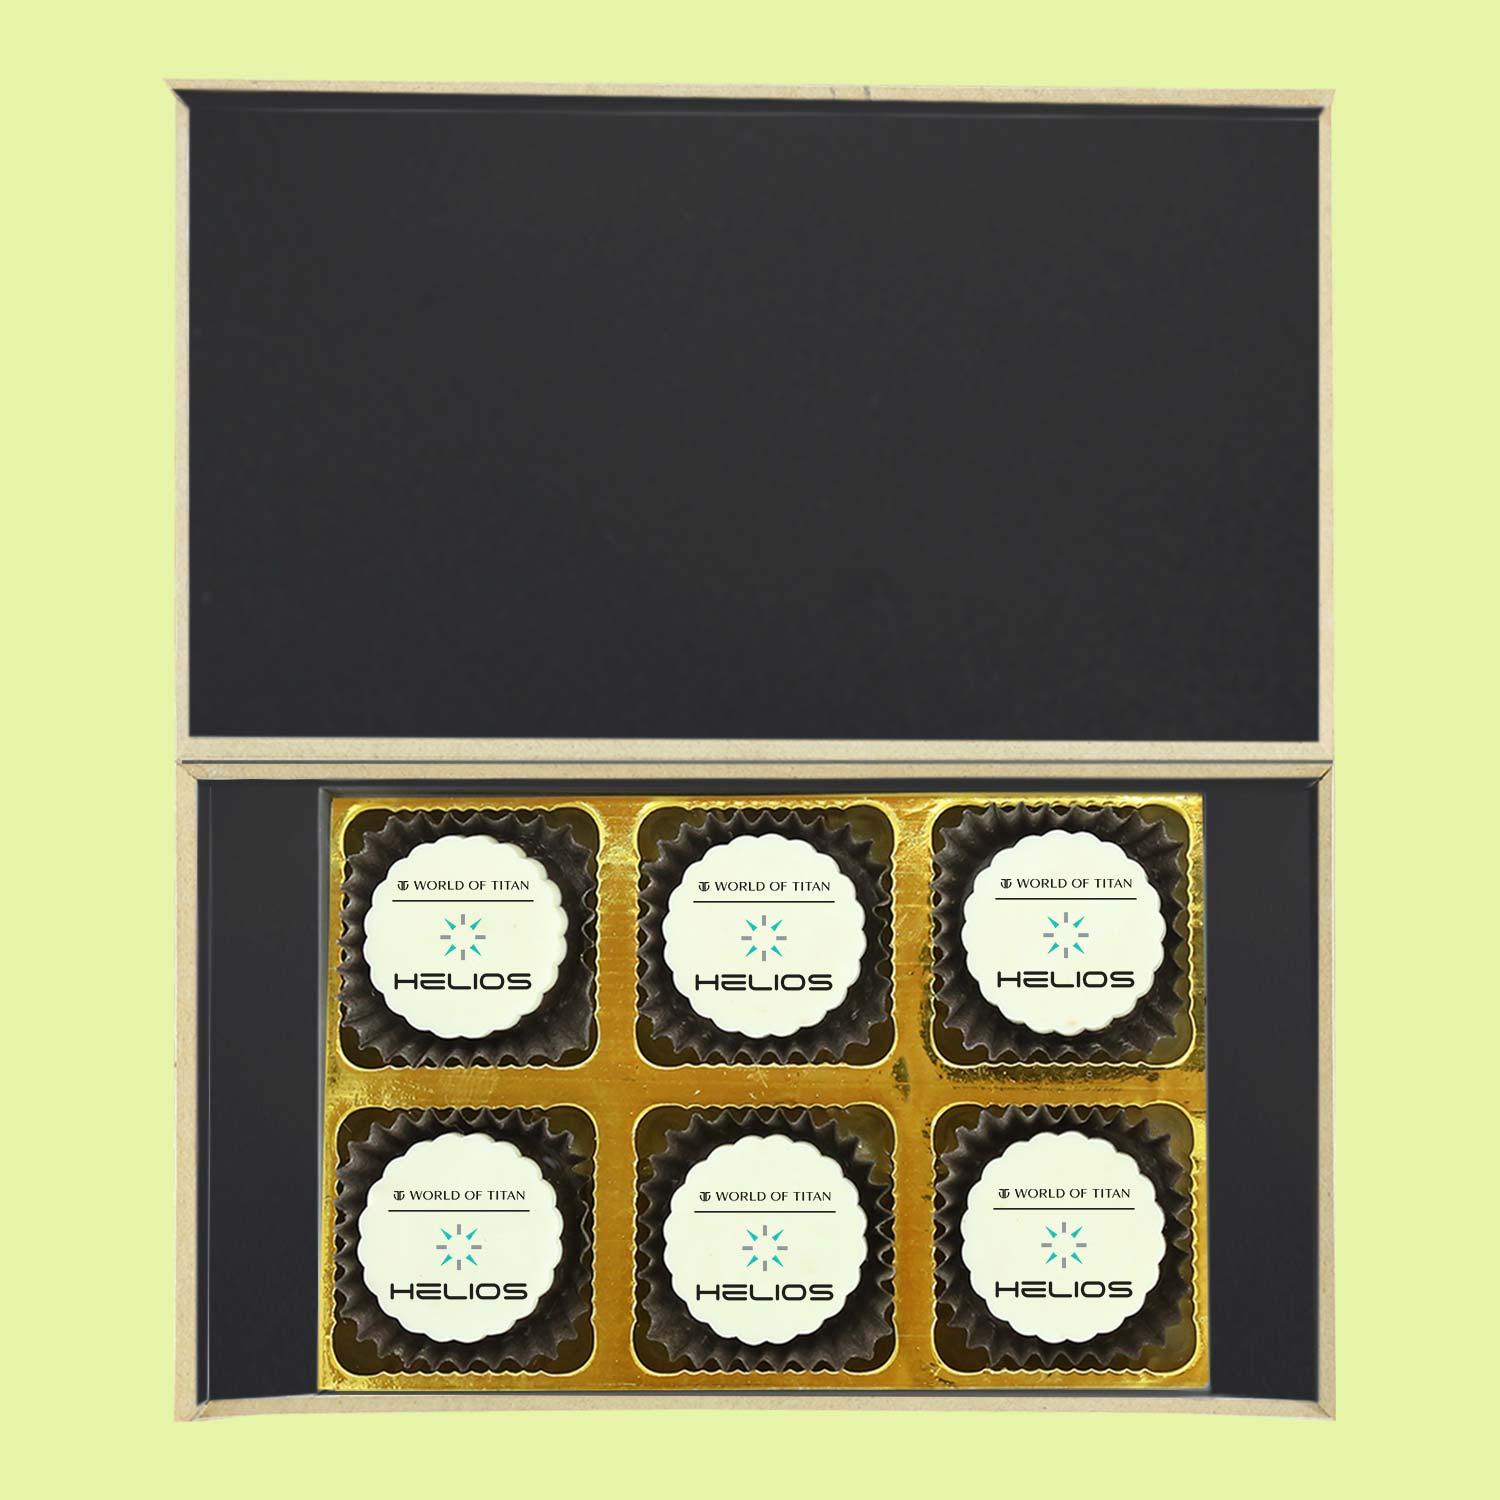 Stylish corporate gift of printed chocolates box - Choco Manual ART